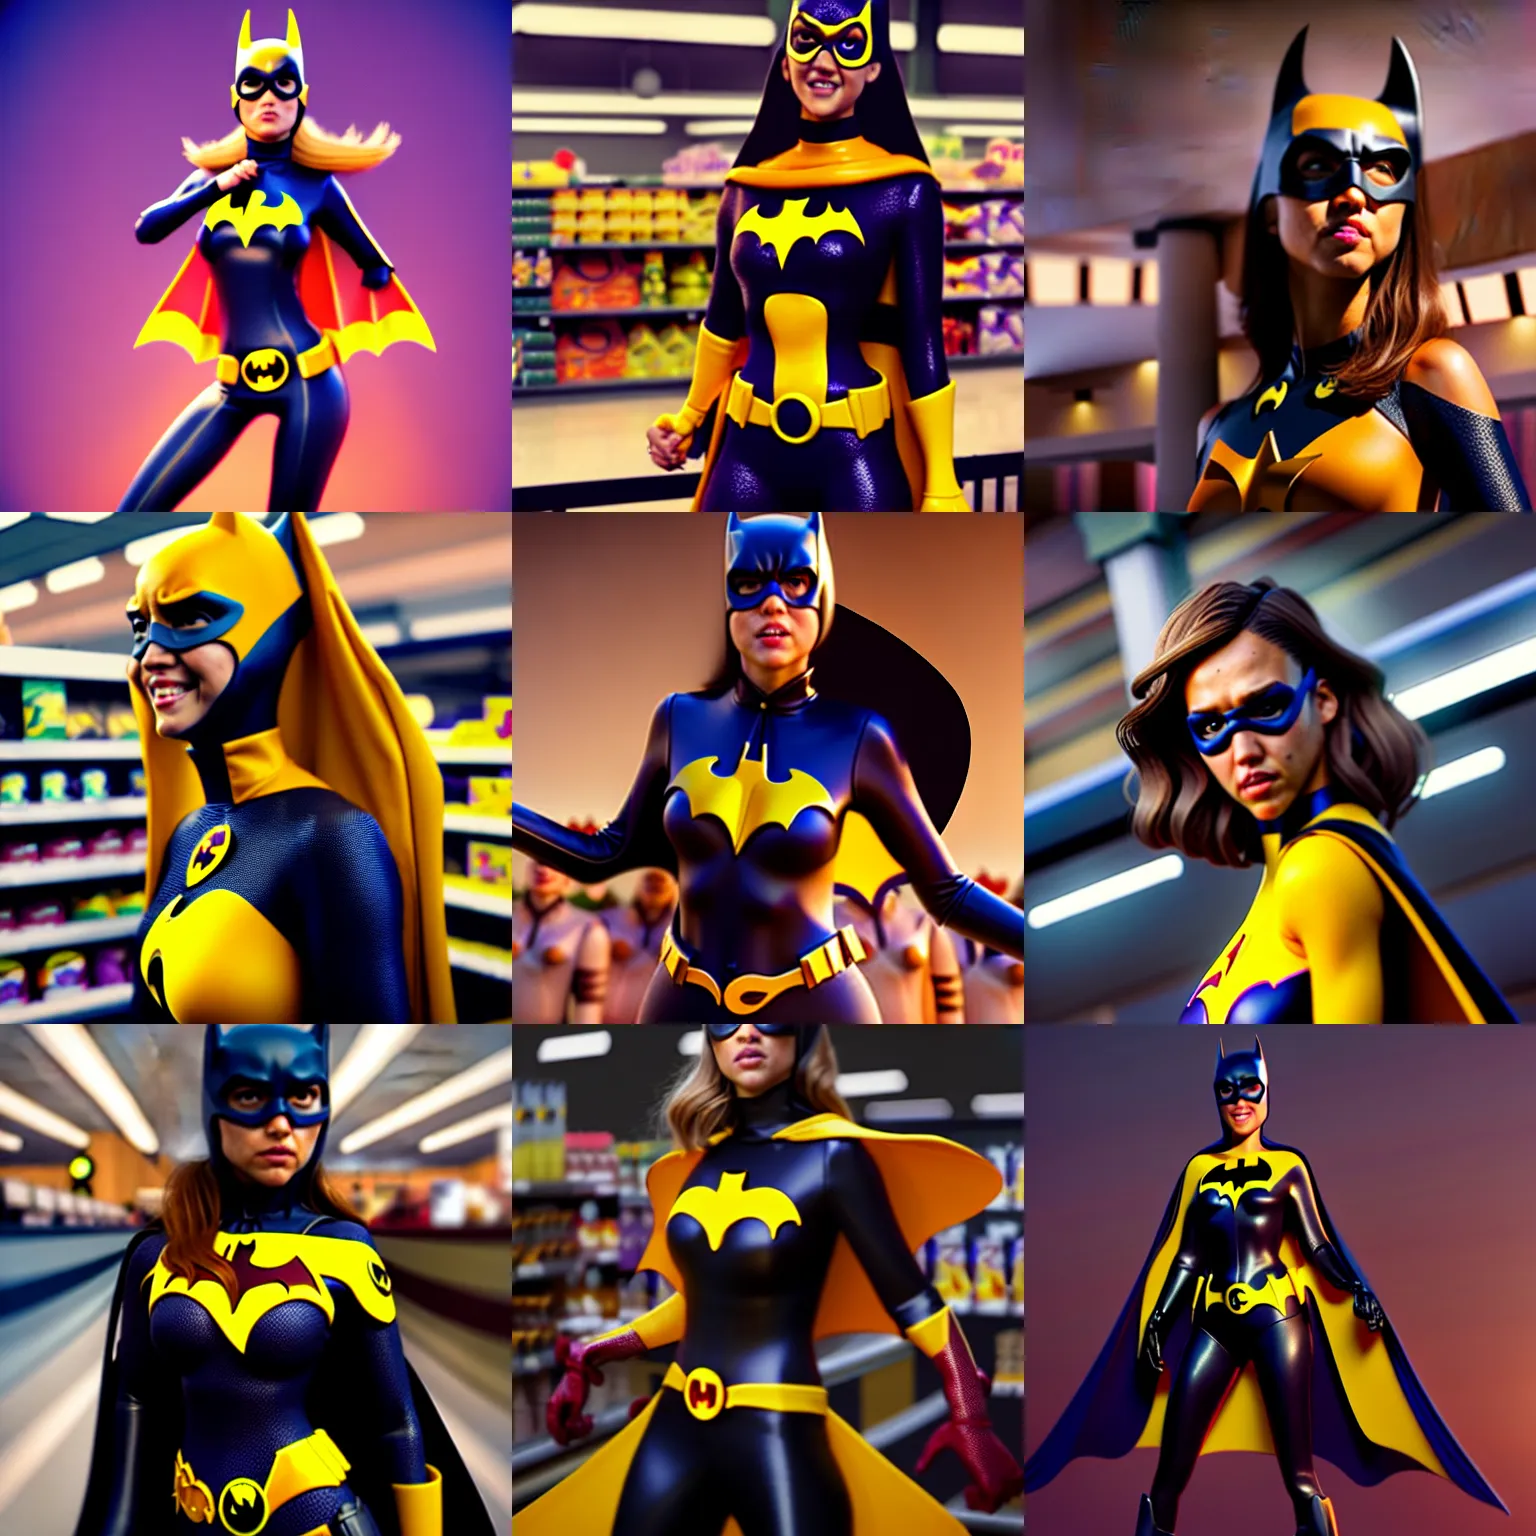 Prompt: jessica alba as batgirl standing in line in a crowded grocery store : : octane render, artstation, weta, pixar, disney : : wlop